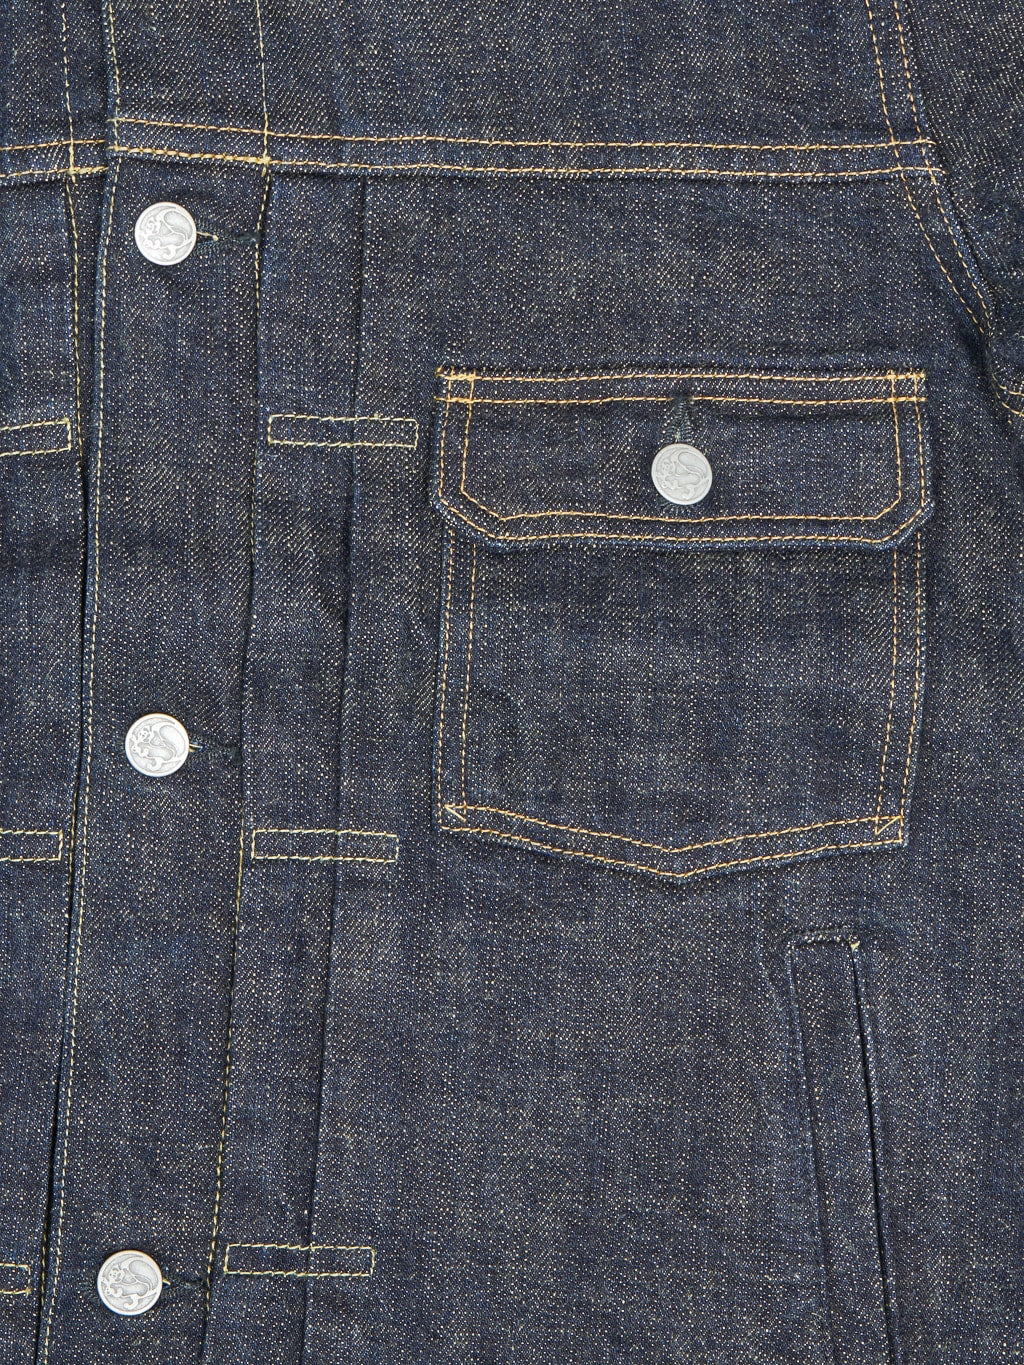 Tanuki soga selvedge denim type II jacket pocket detail front view